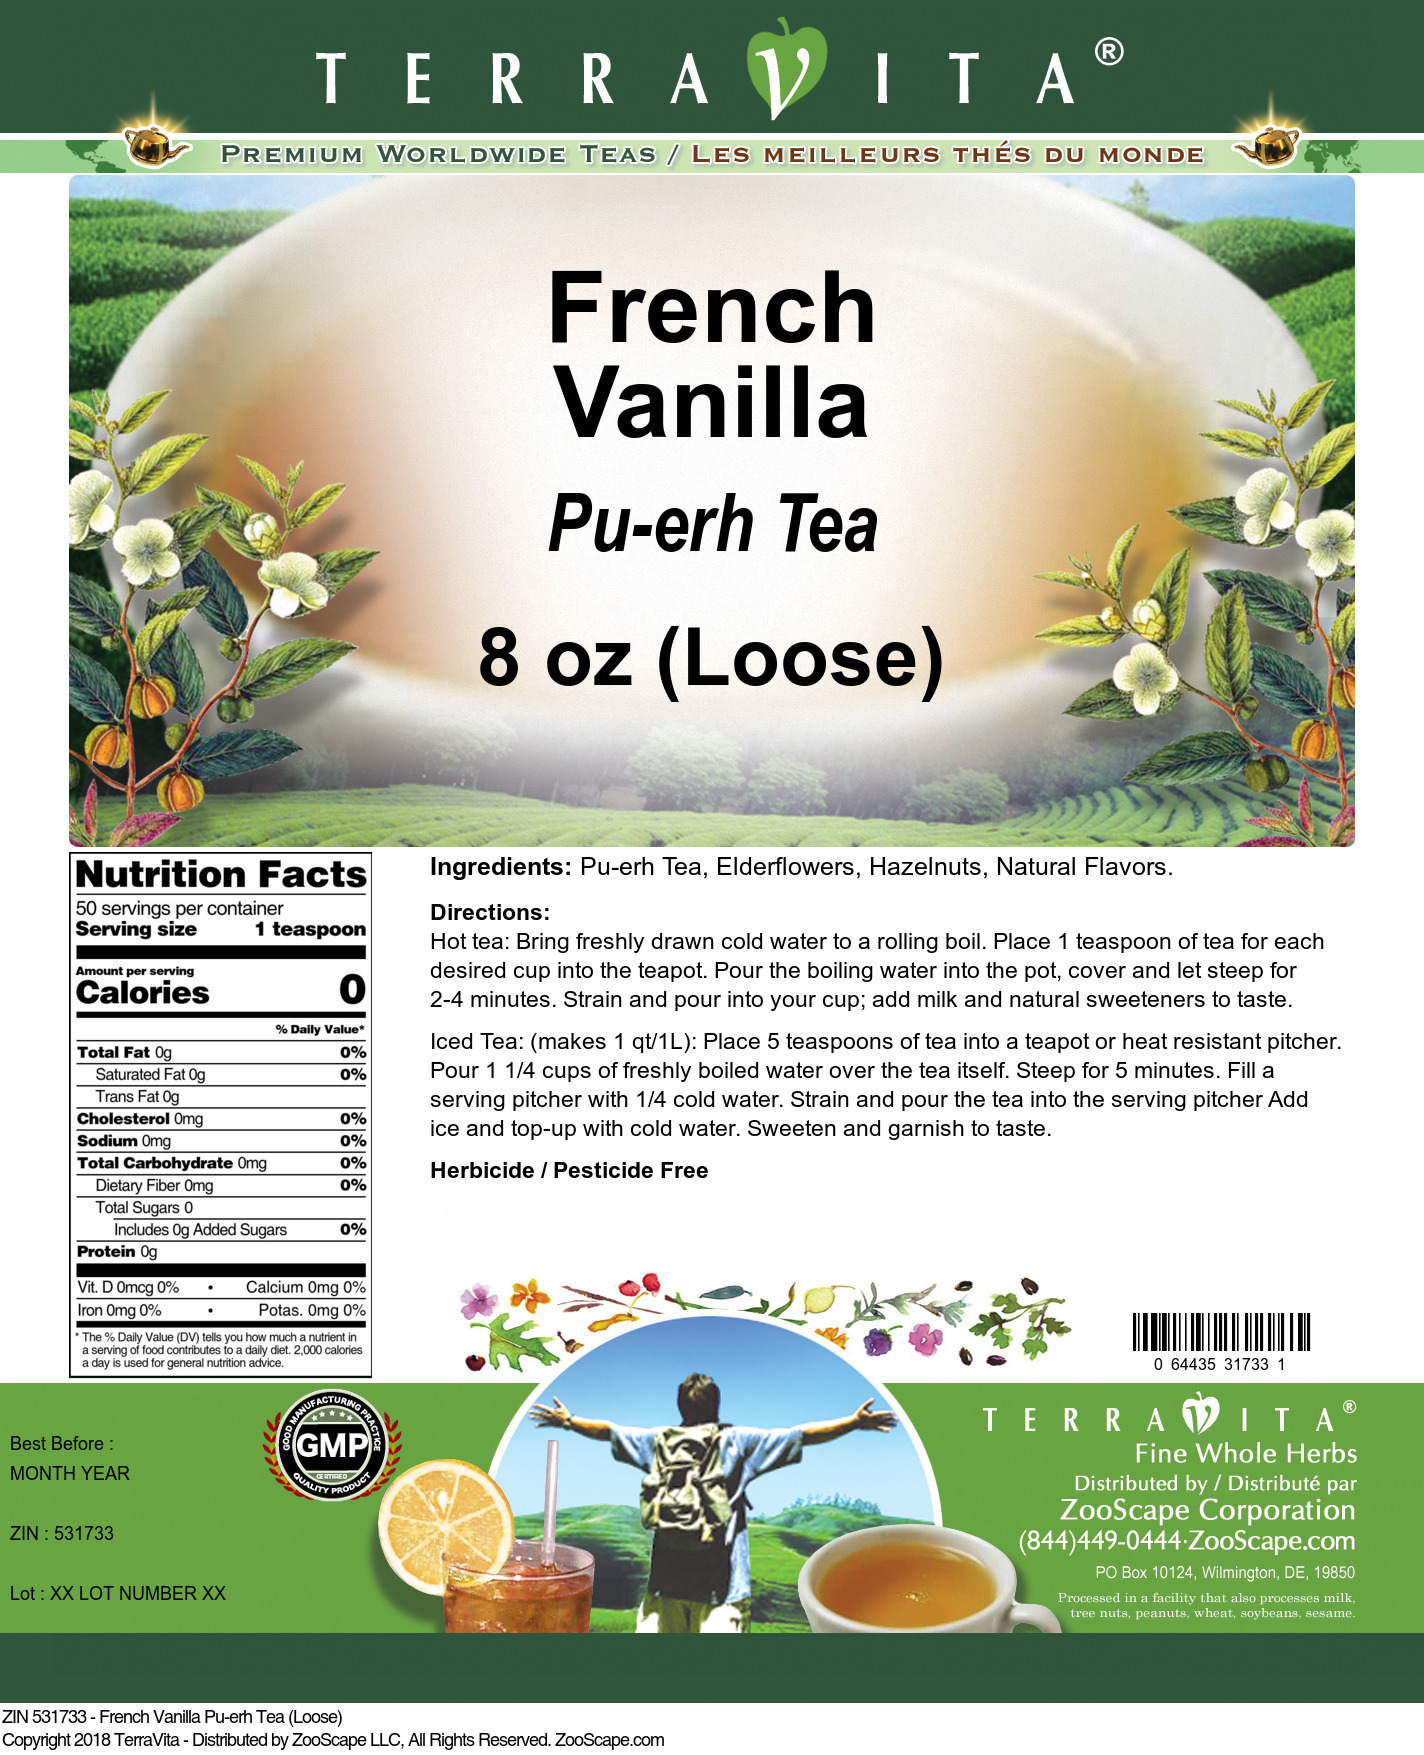 French Vanilla Pu-erh Tea (Loose) - Label